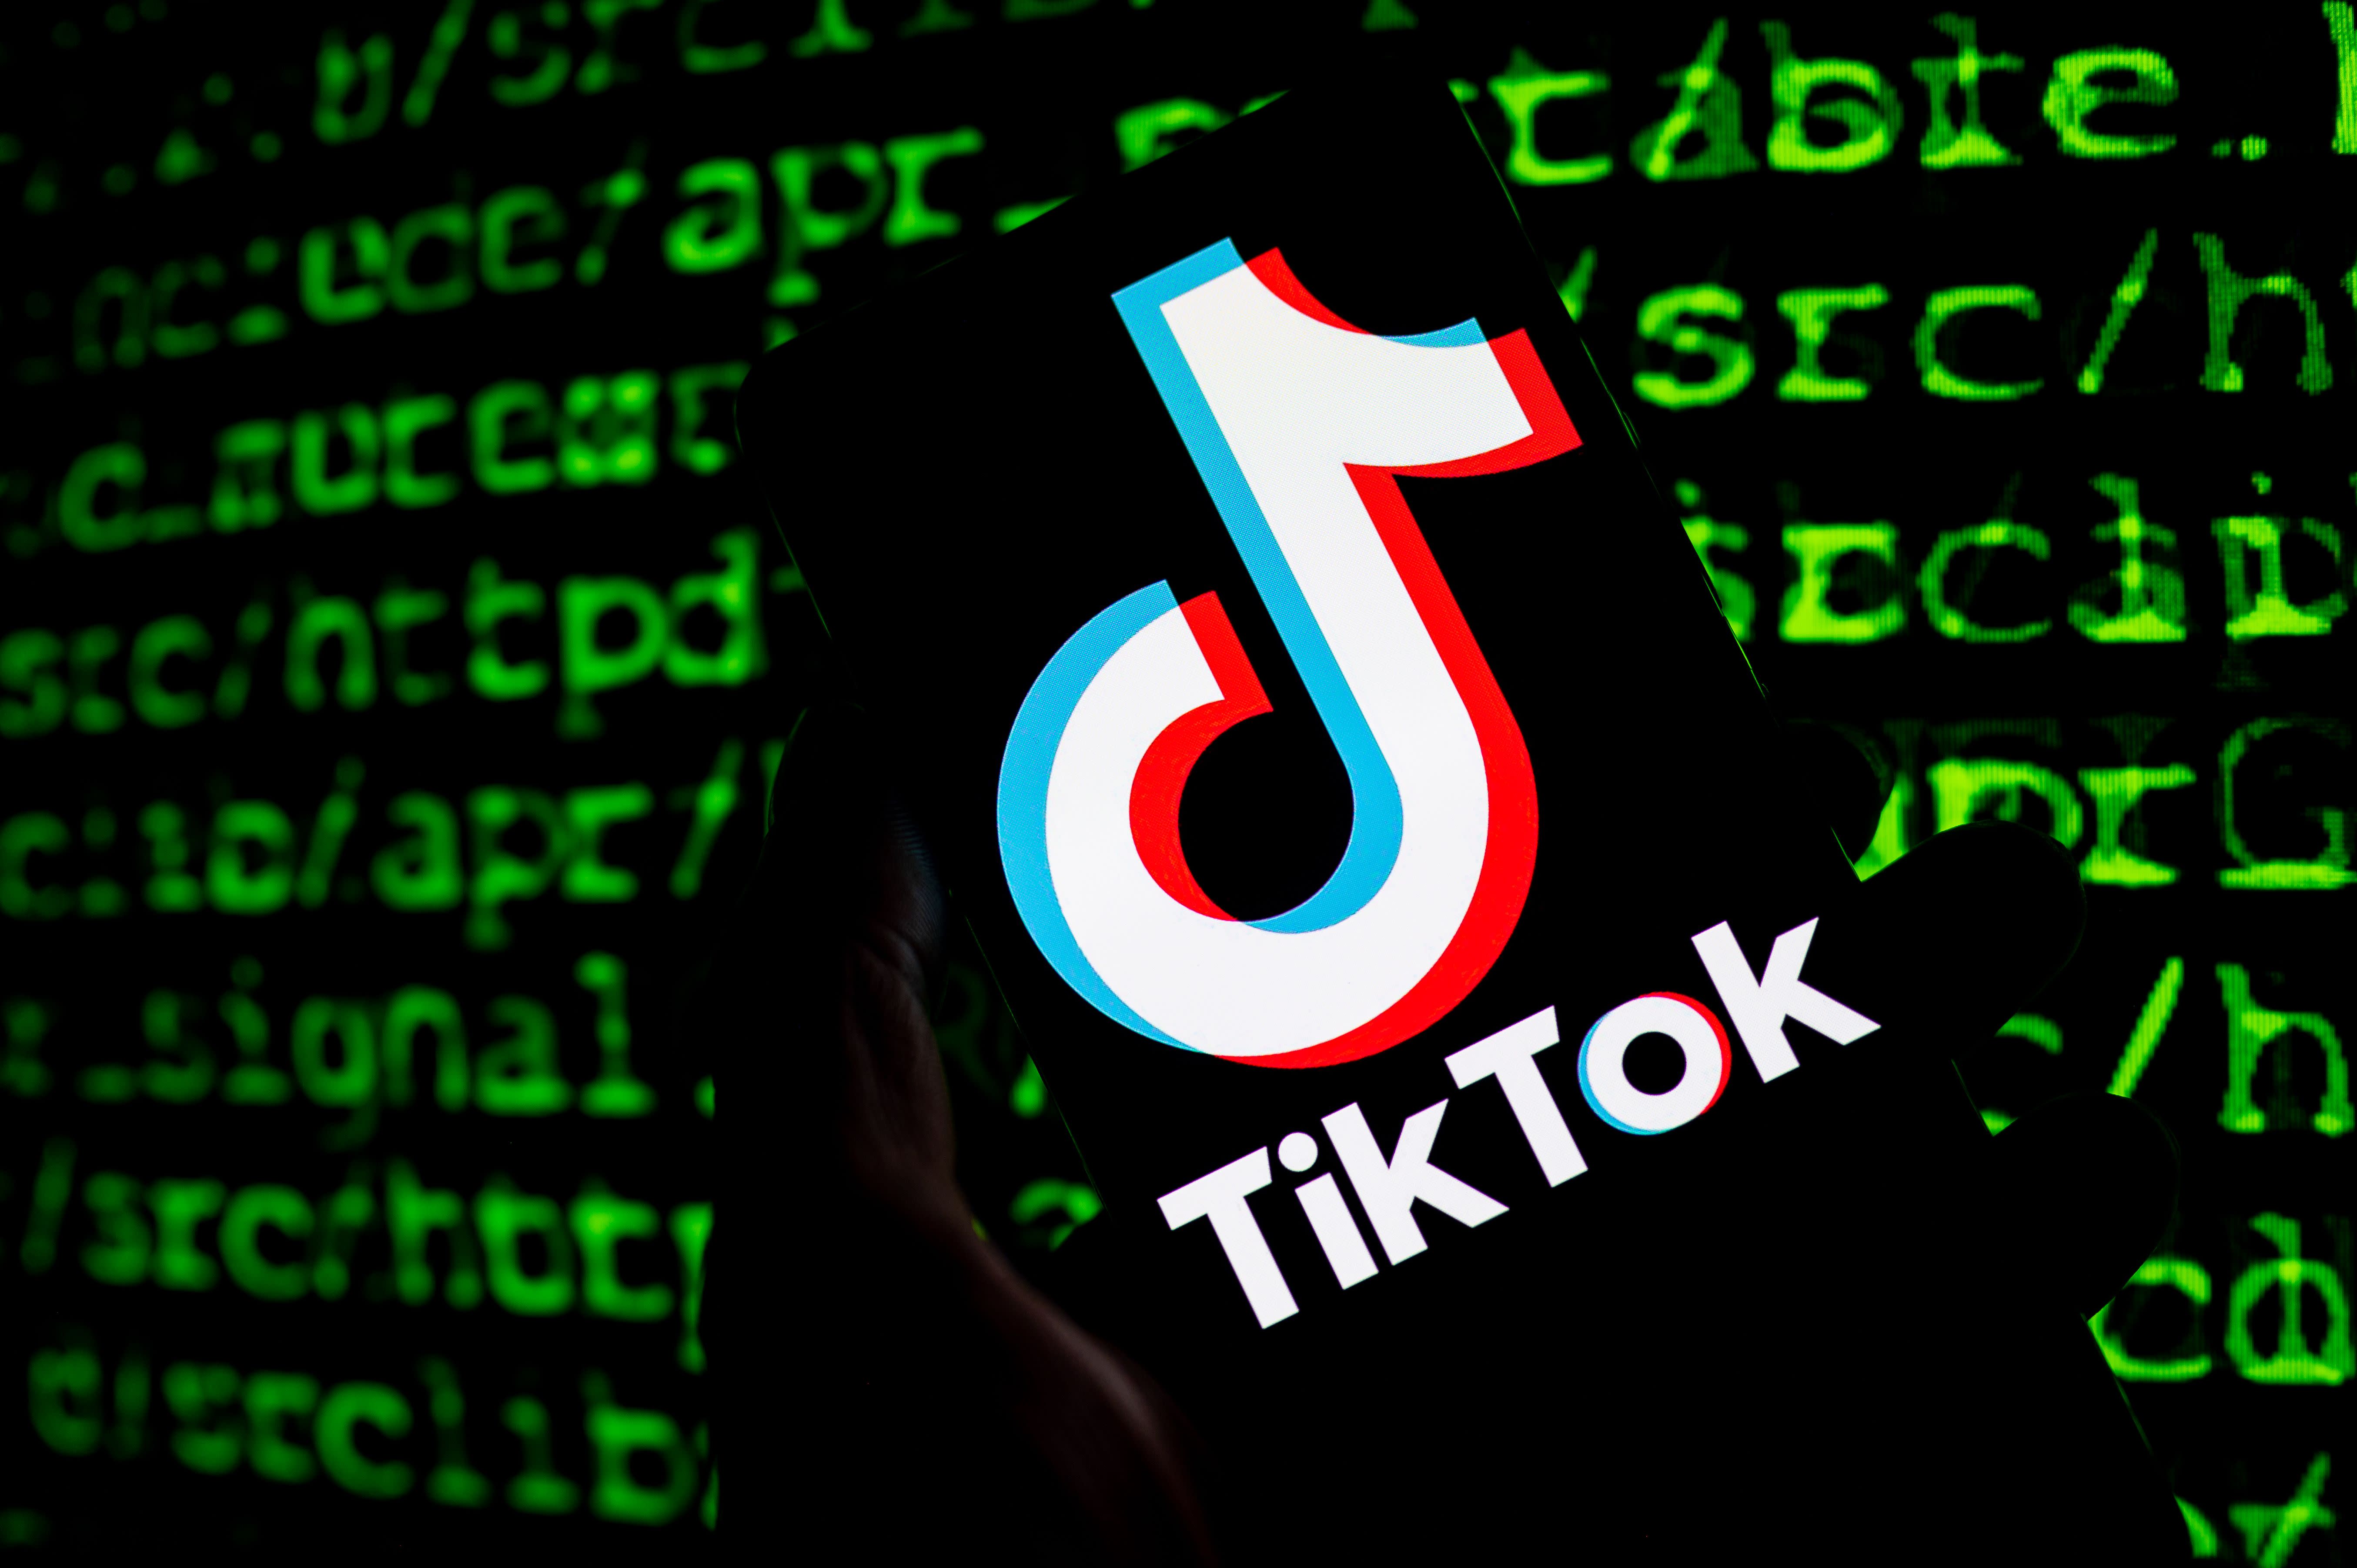 Telia prohibits employees from using Tiktok on company devices